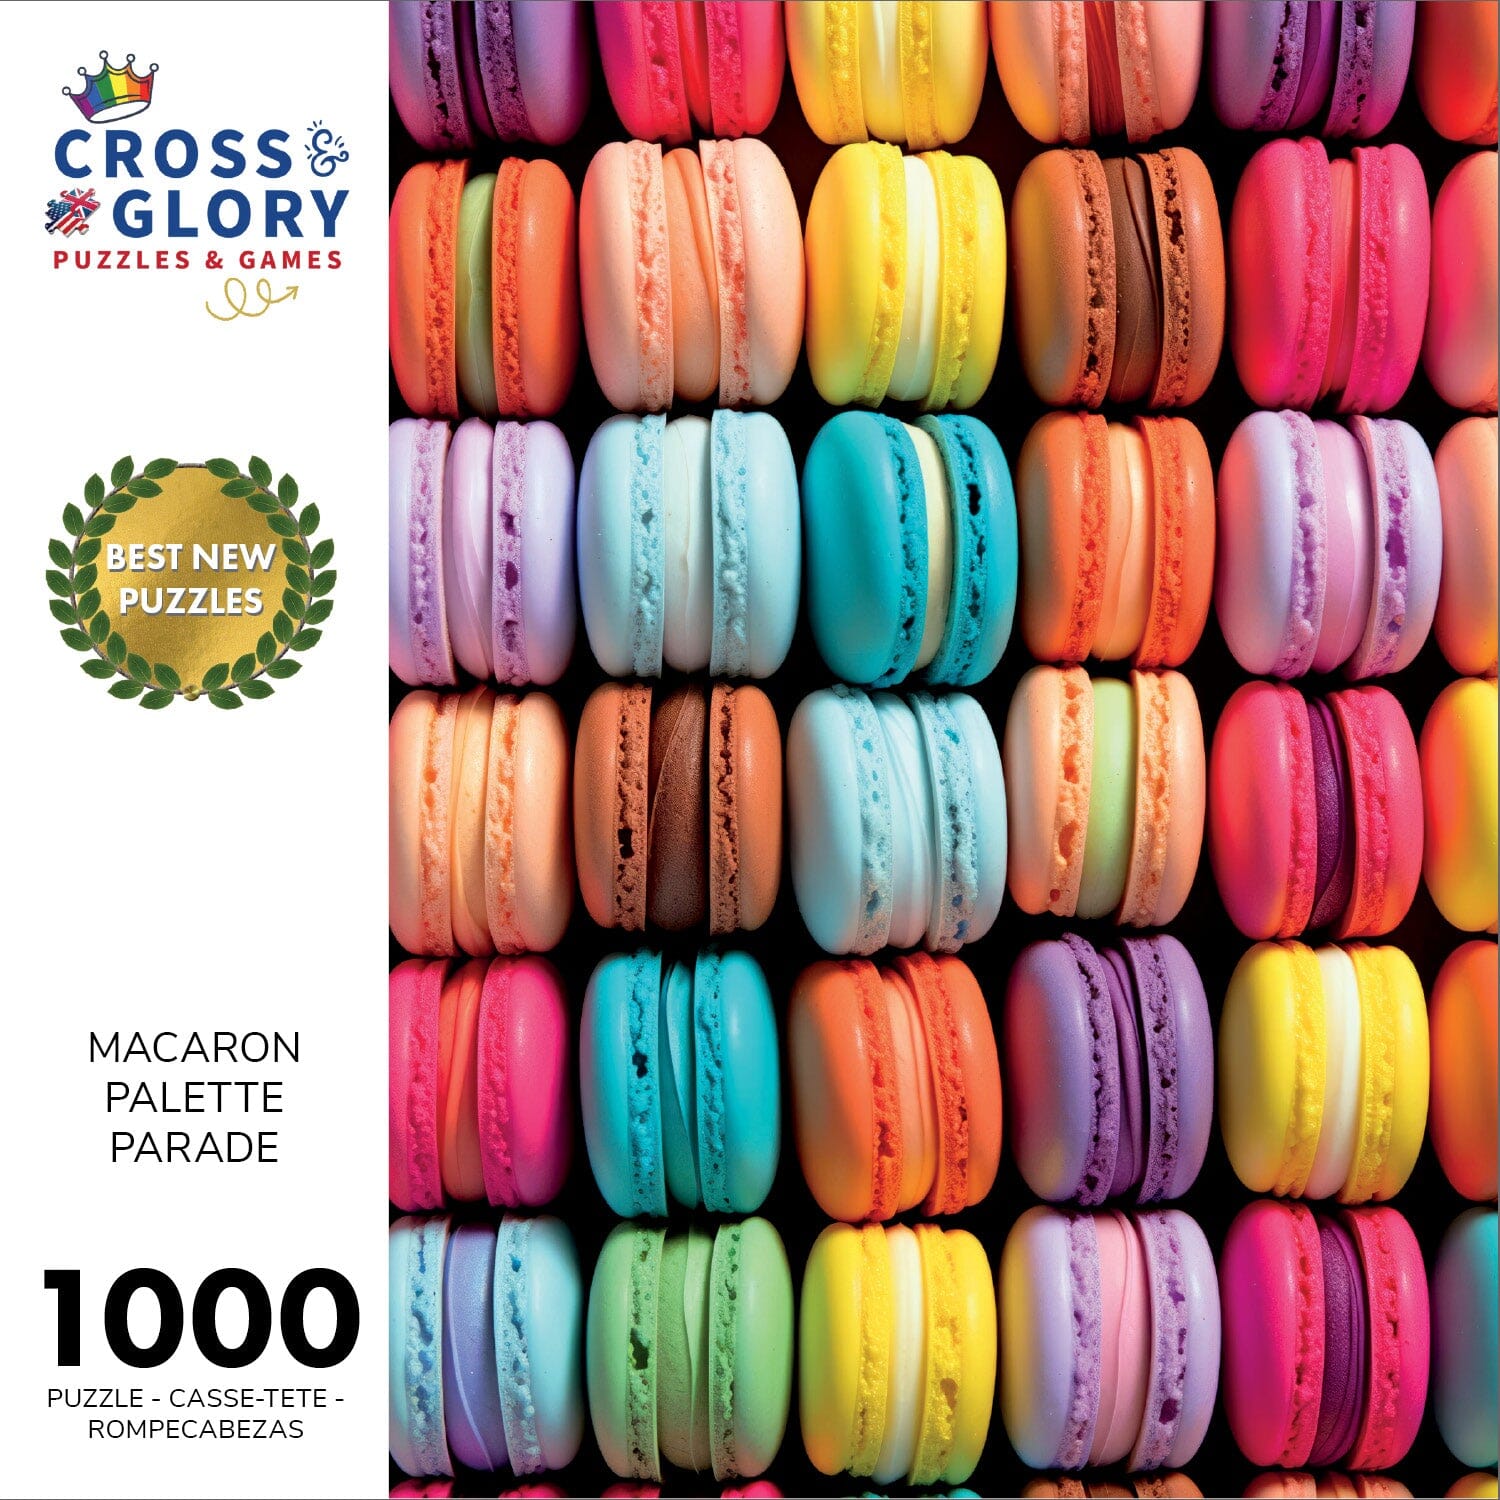 Macaron Palette Parade - 1000 Piece Jigsaw Puzzle Jigsaw Puzzles Cross & Glory